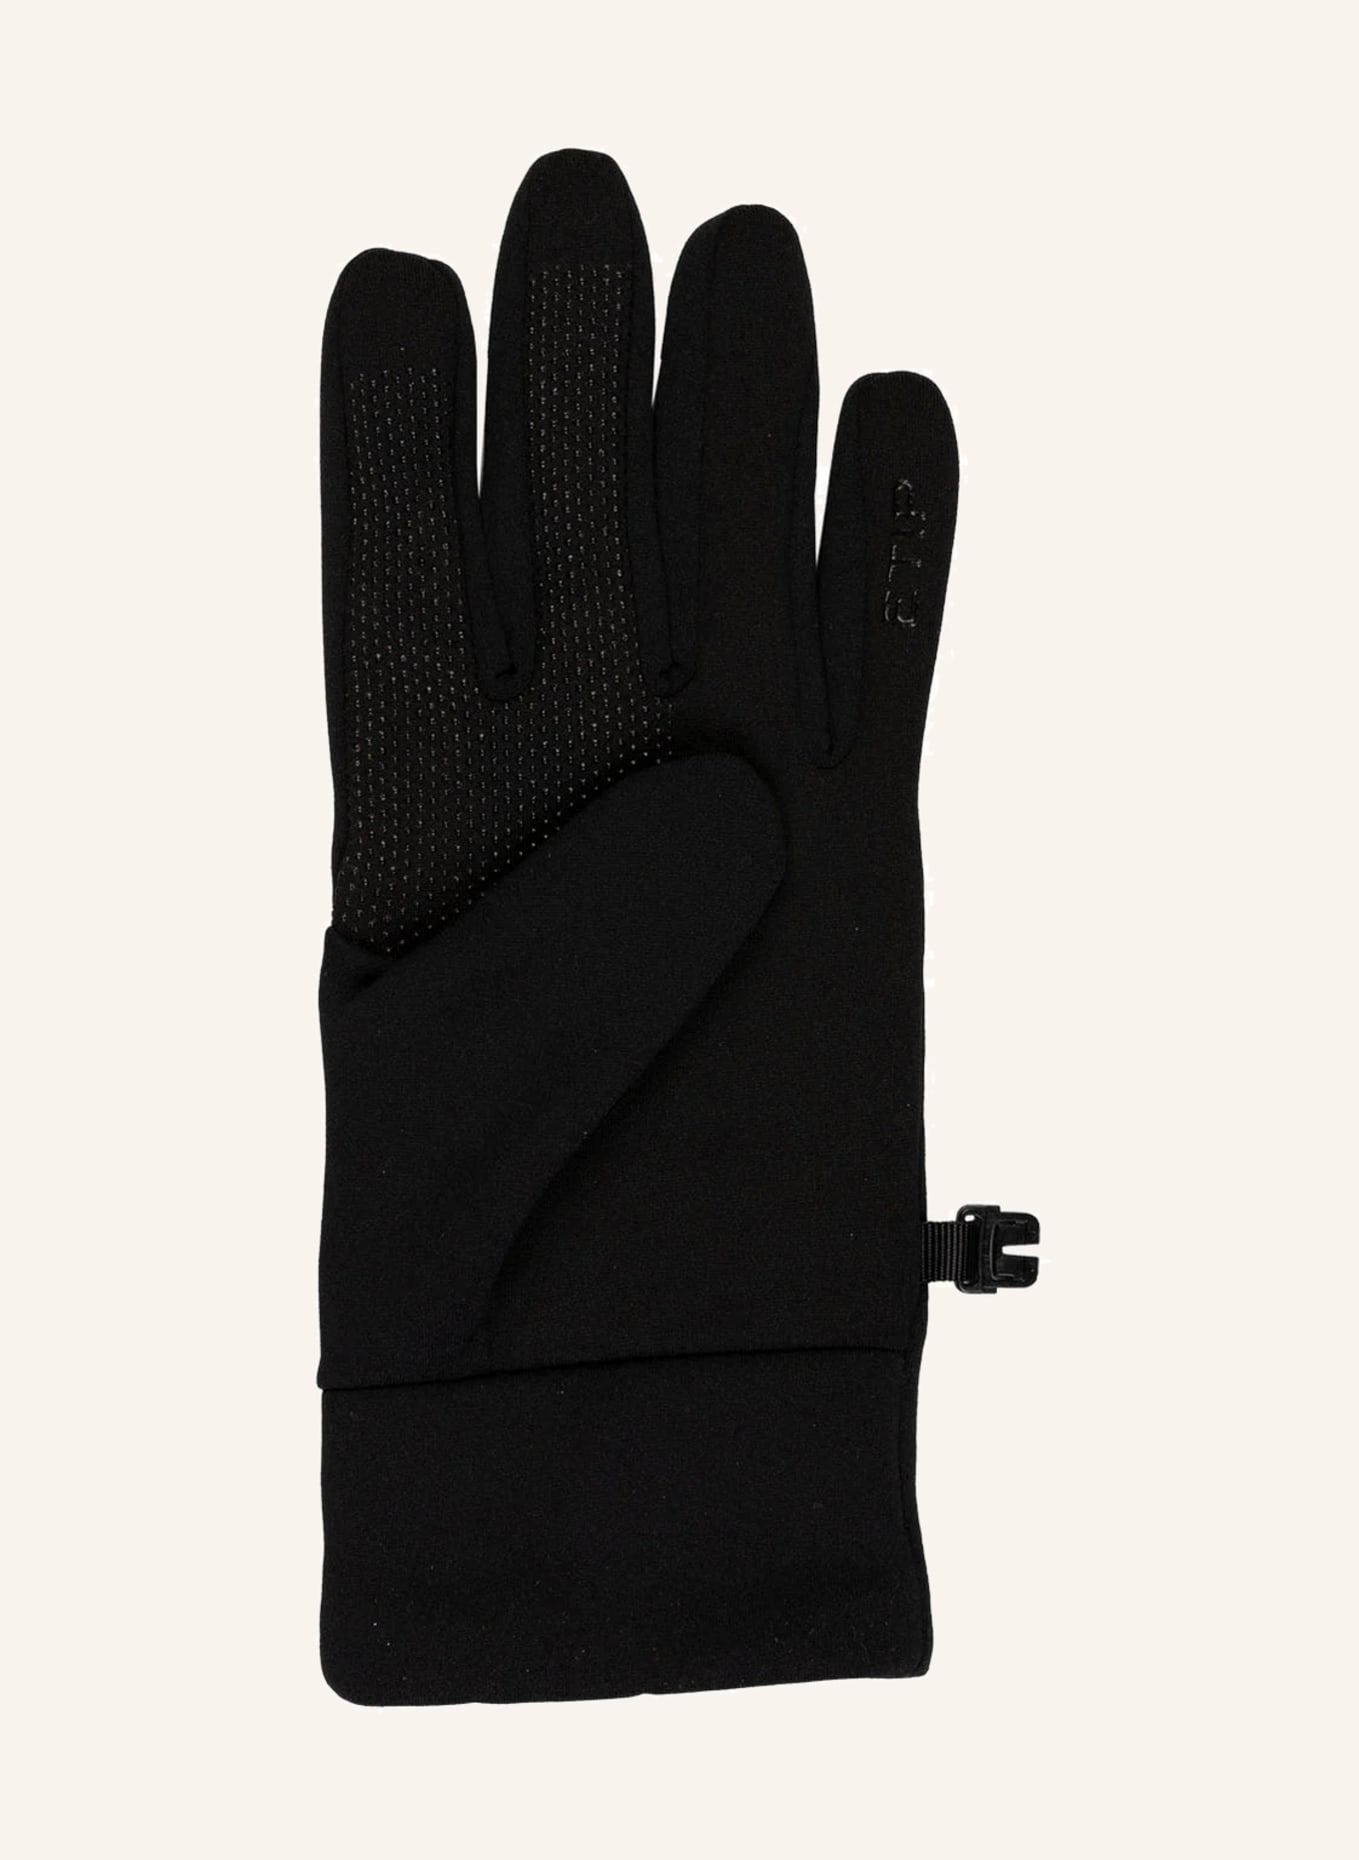 THE NORTH FACE Multisport-Handschuhe ETIP mit Touchscreen-Funktion in jk3  tnf black